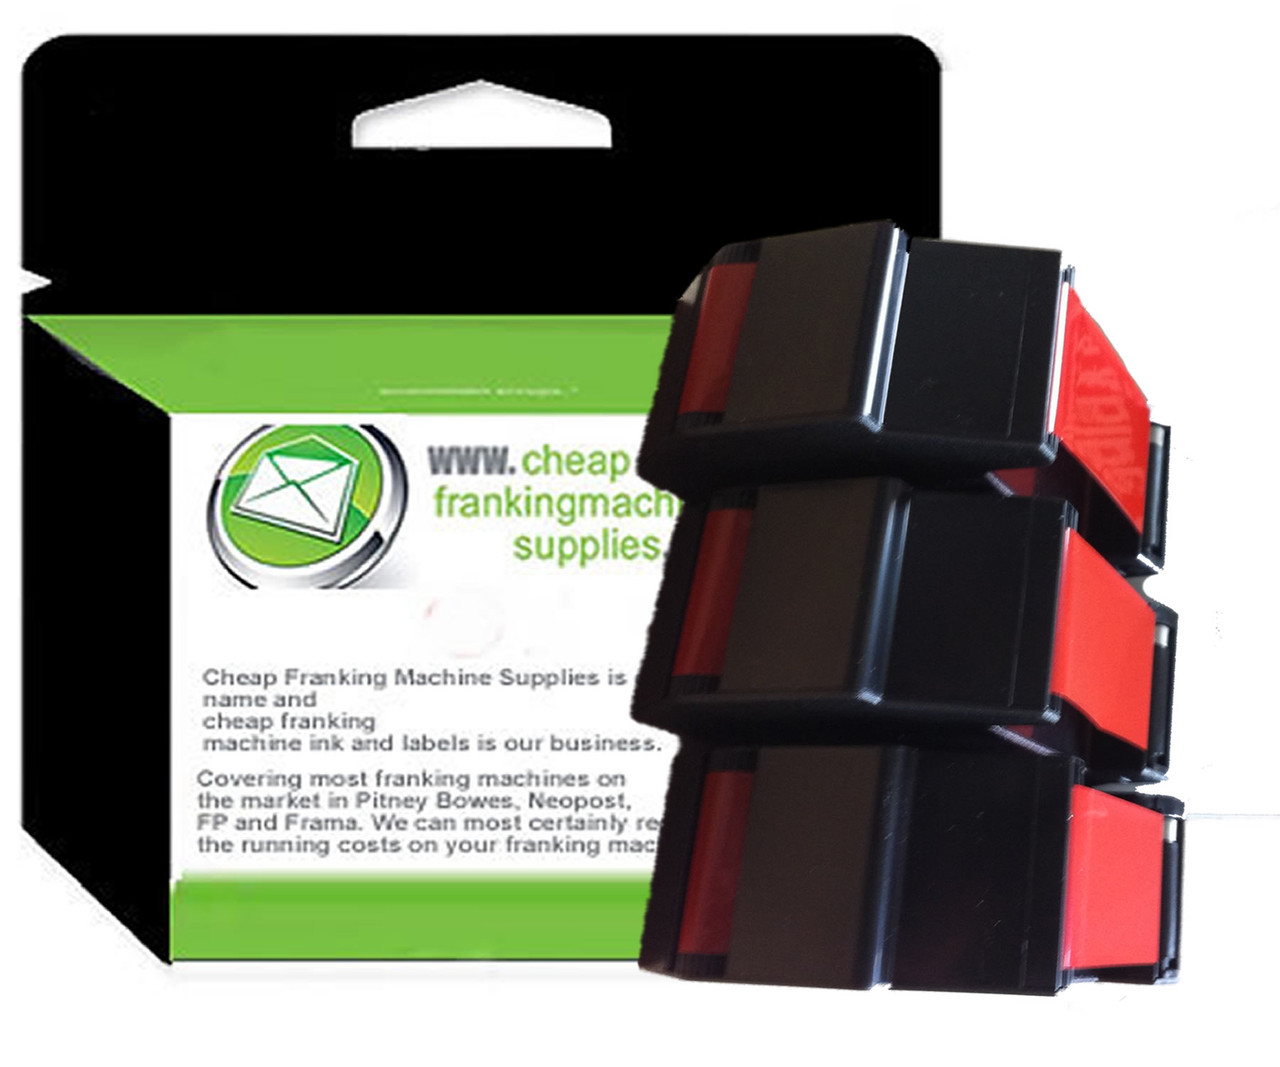 Compatible Francotyp Postalia FP T1000 Ink Ribbons - 3 Pack